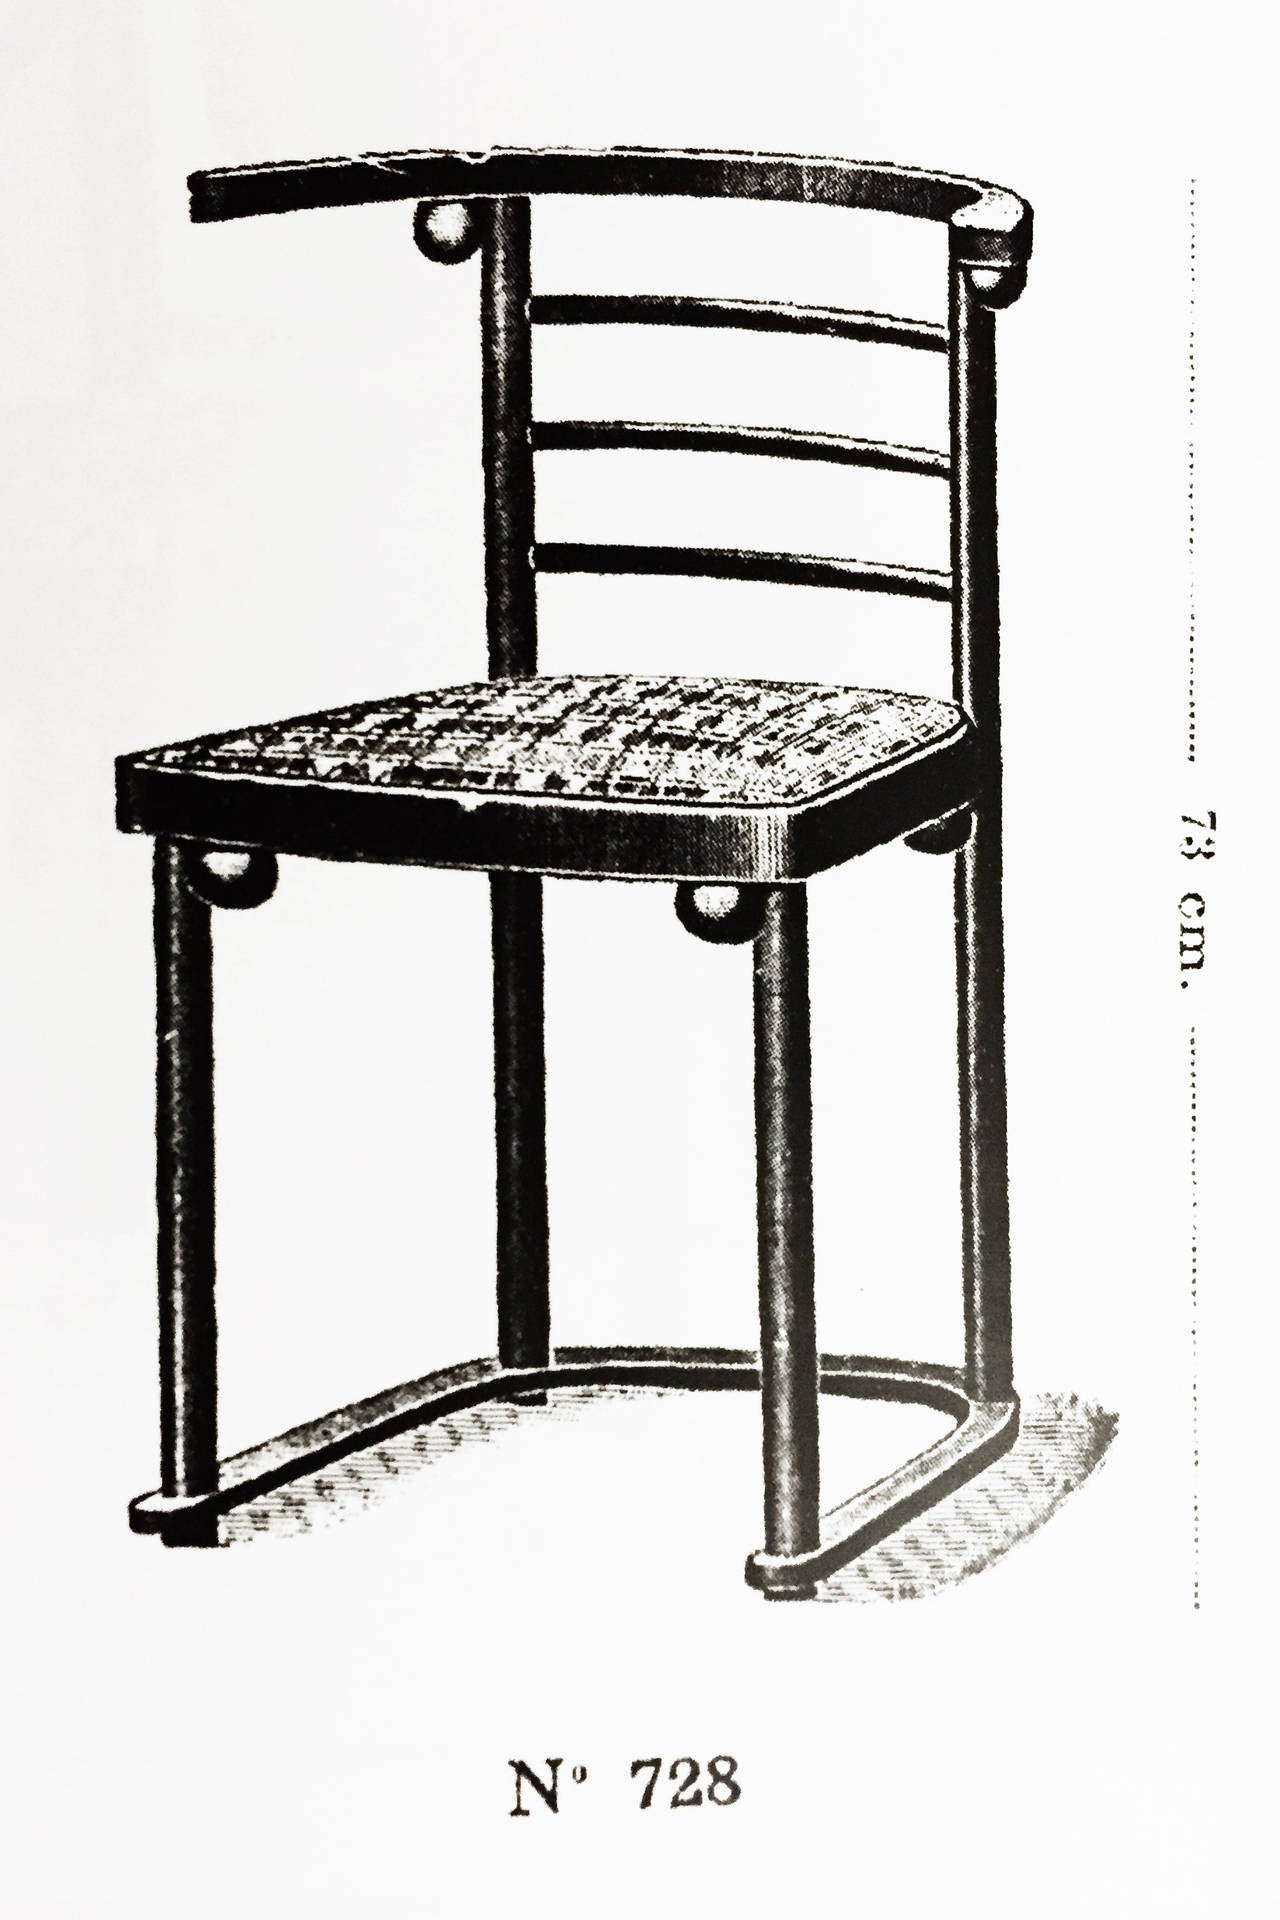 Vienna Secession Kohn Chair Model No. 728 